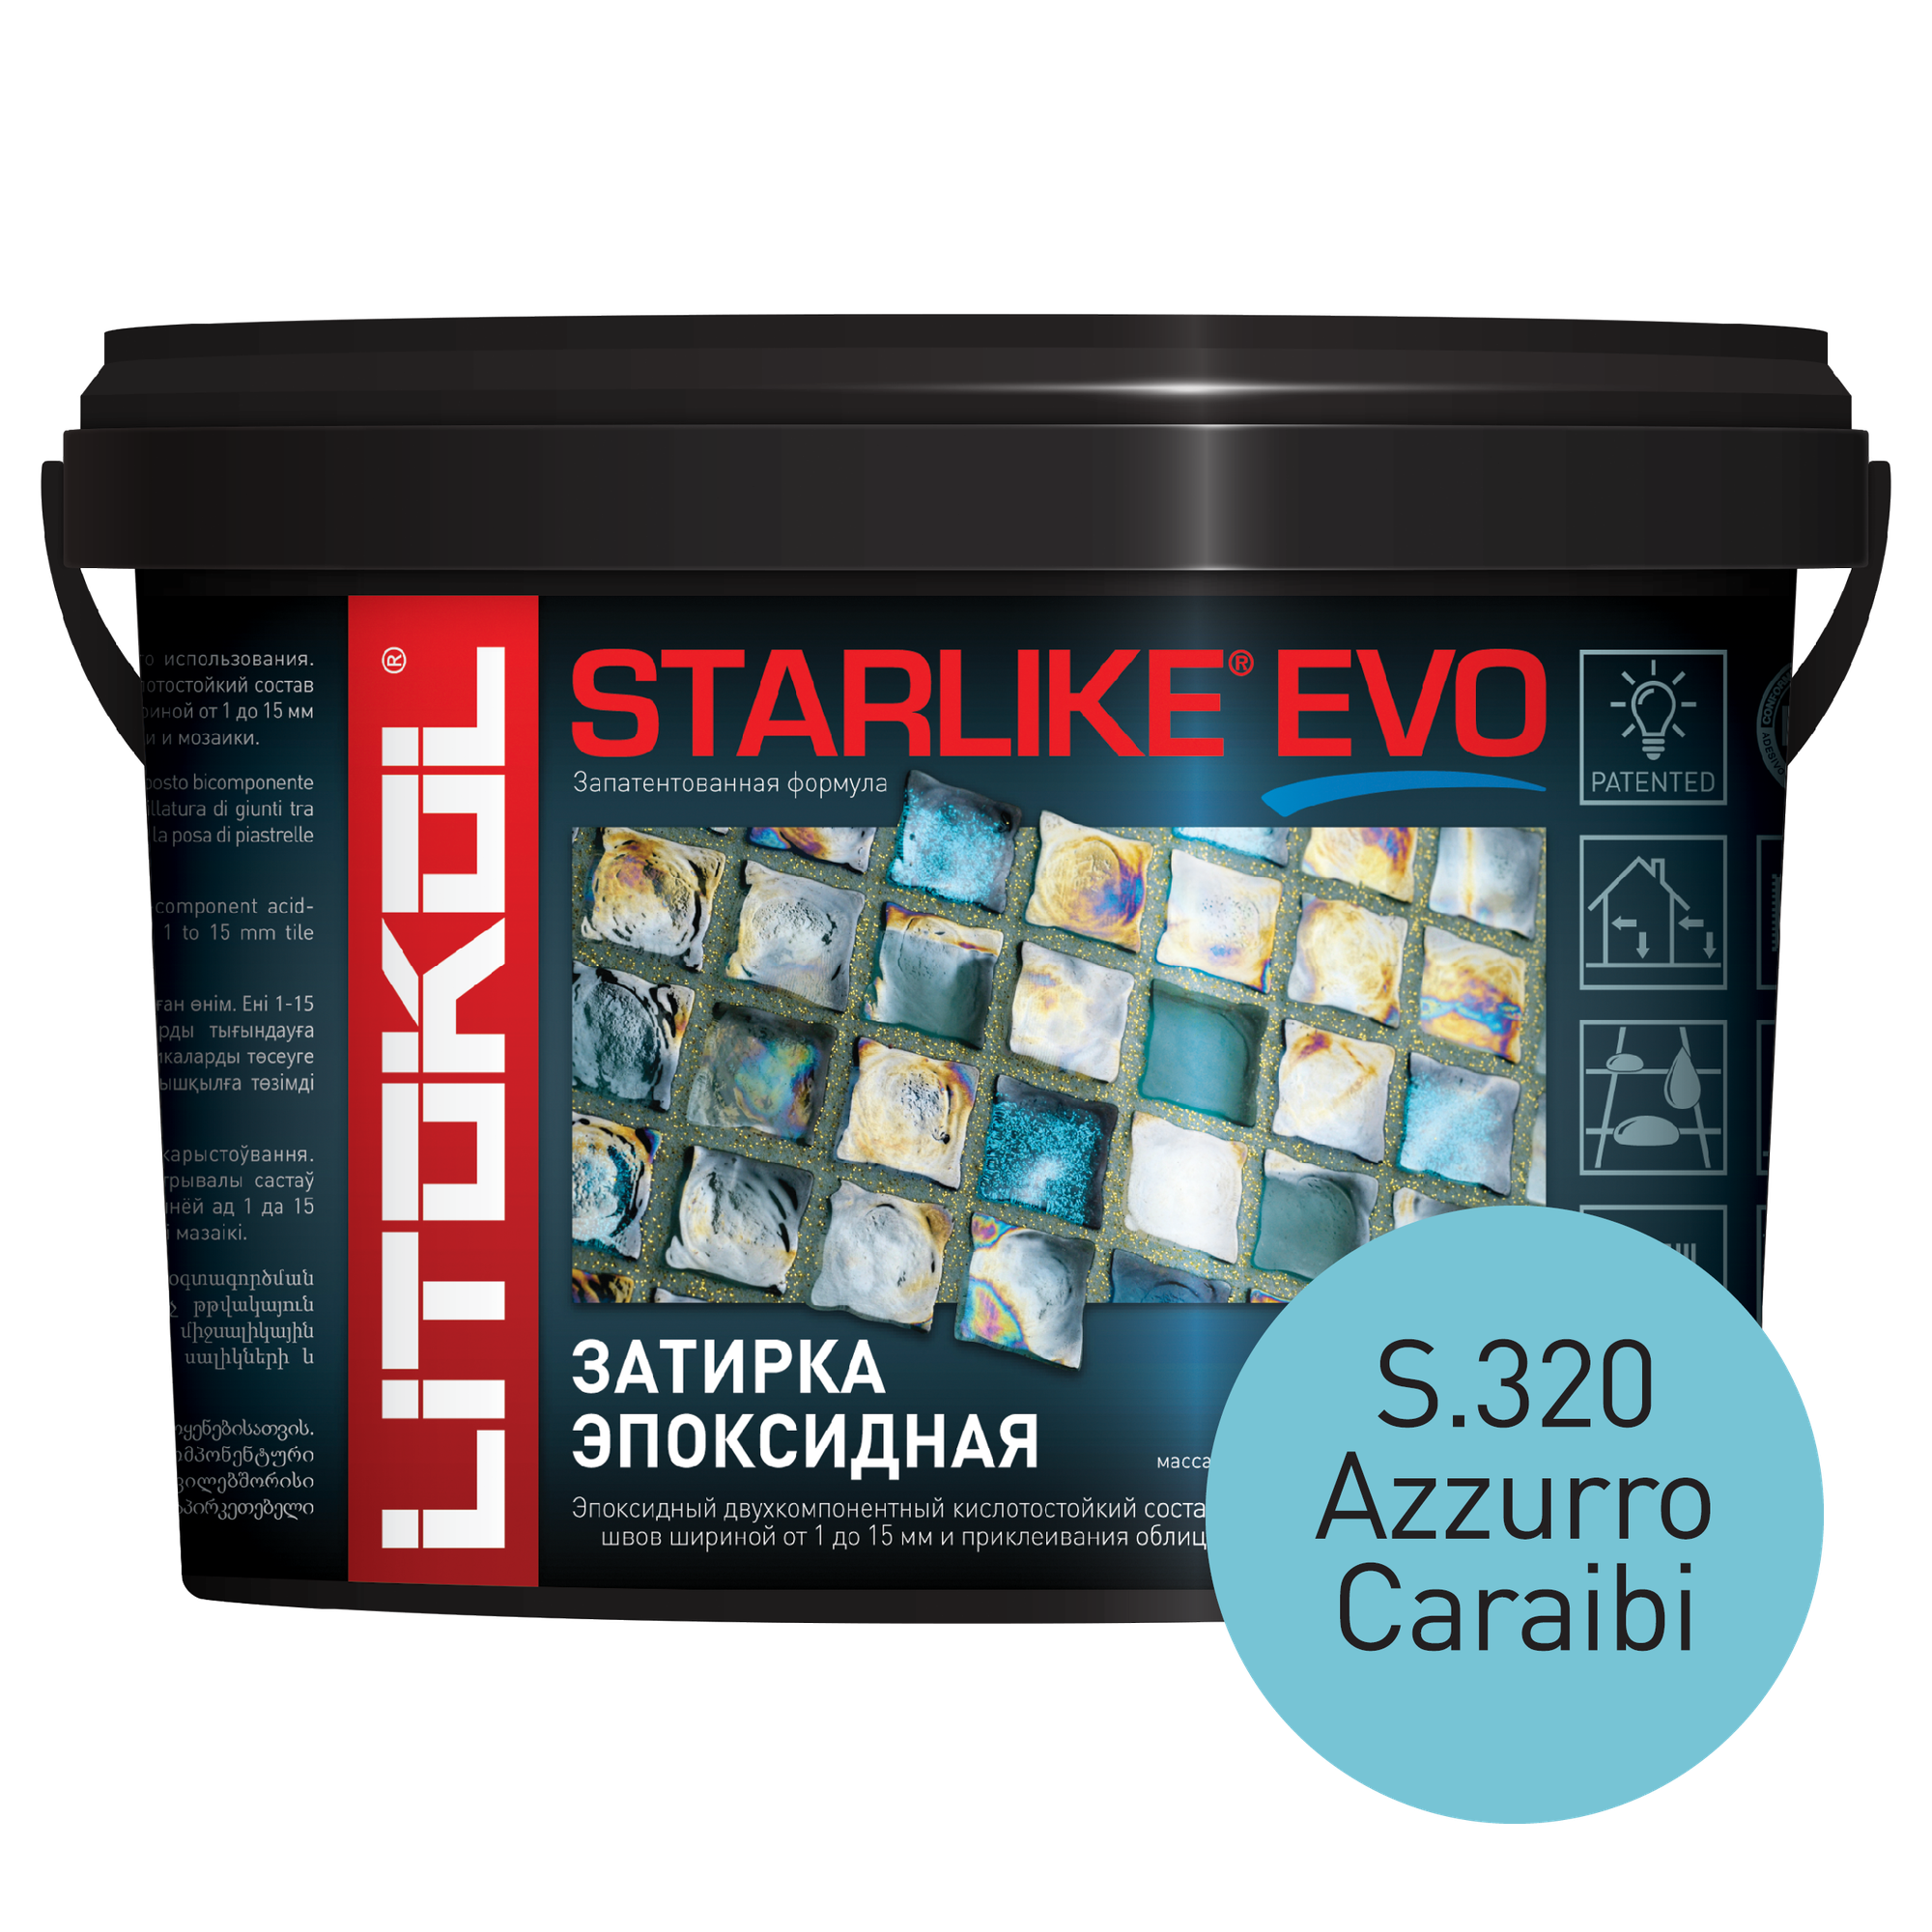 Эпоксидная затирочная смесь LITOKOL STARLIKE EVO S.320 Azzurro Caraibi, 1 кг